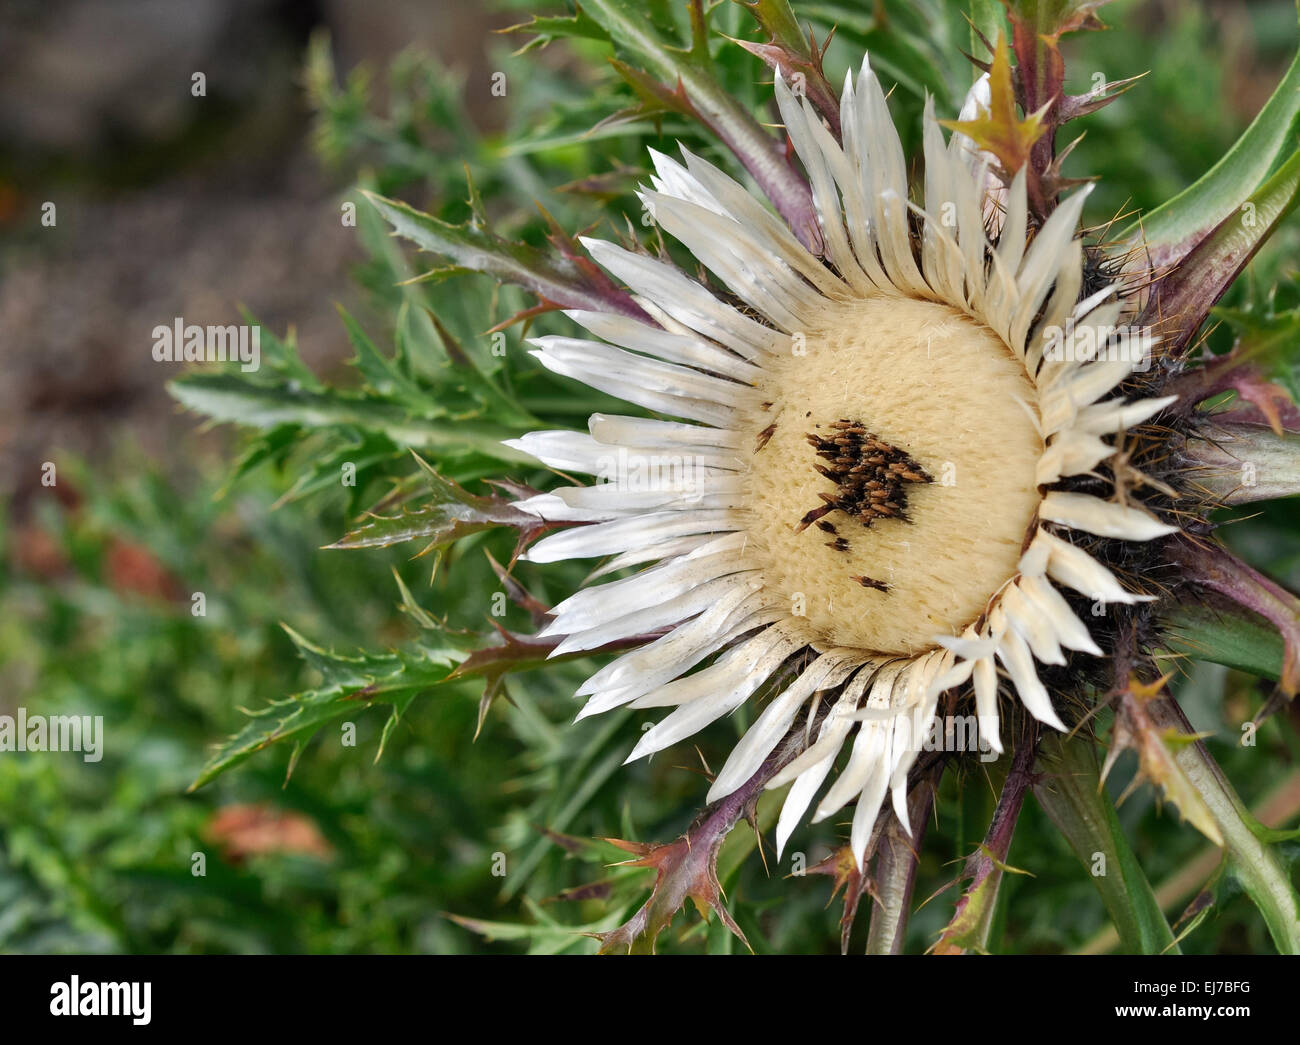 Carlina Acaulis. An unusual low growing plant flowering in summer. Stock Photo